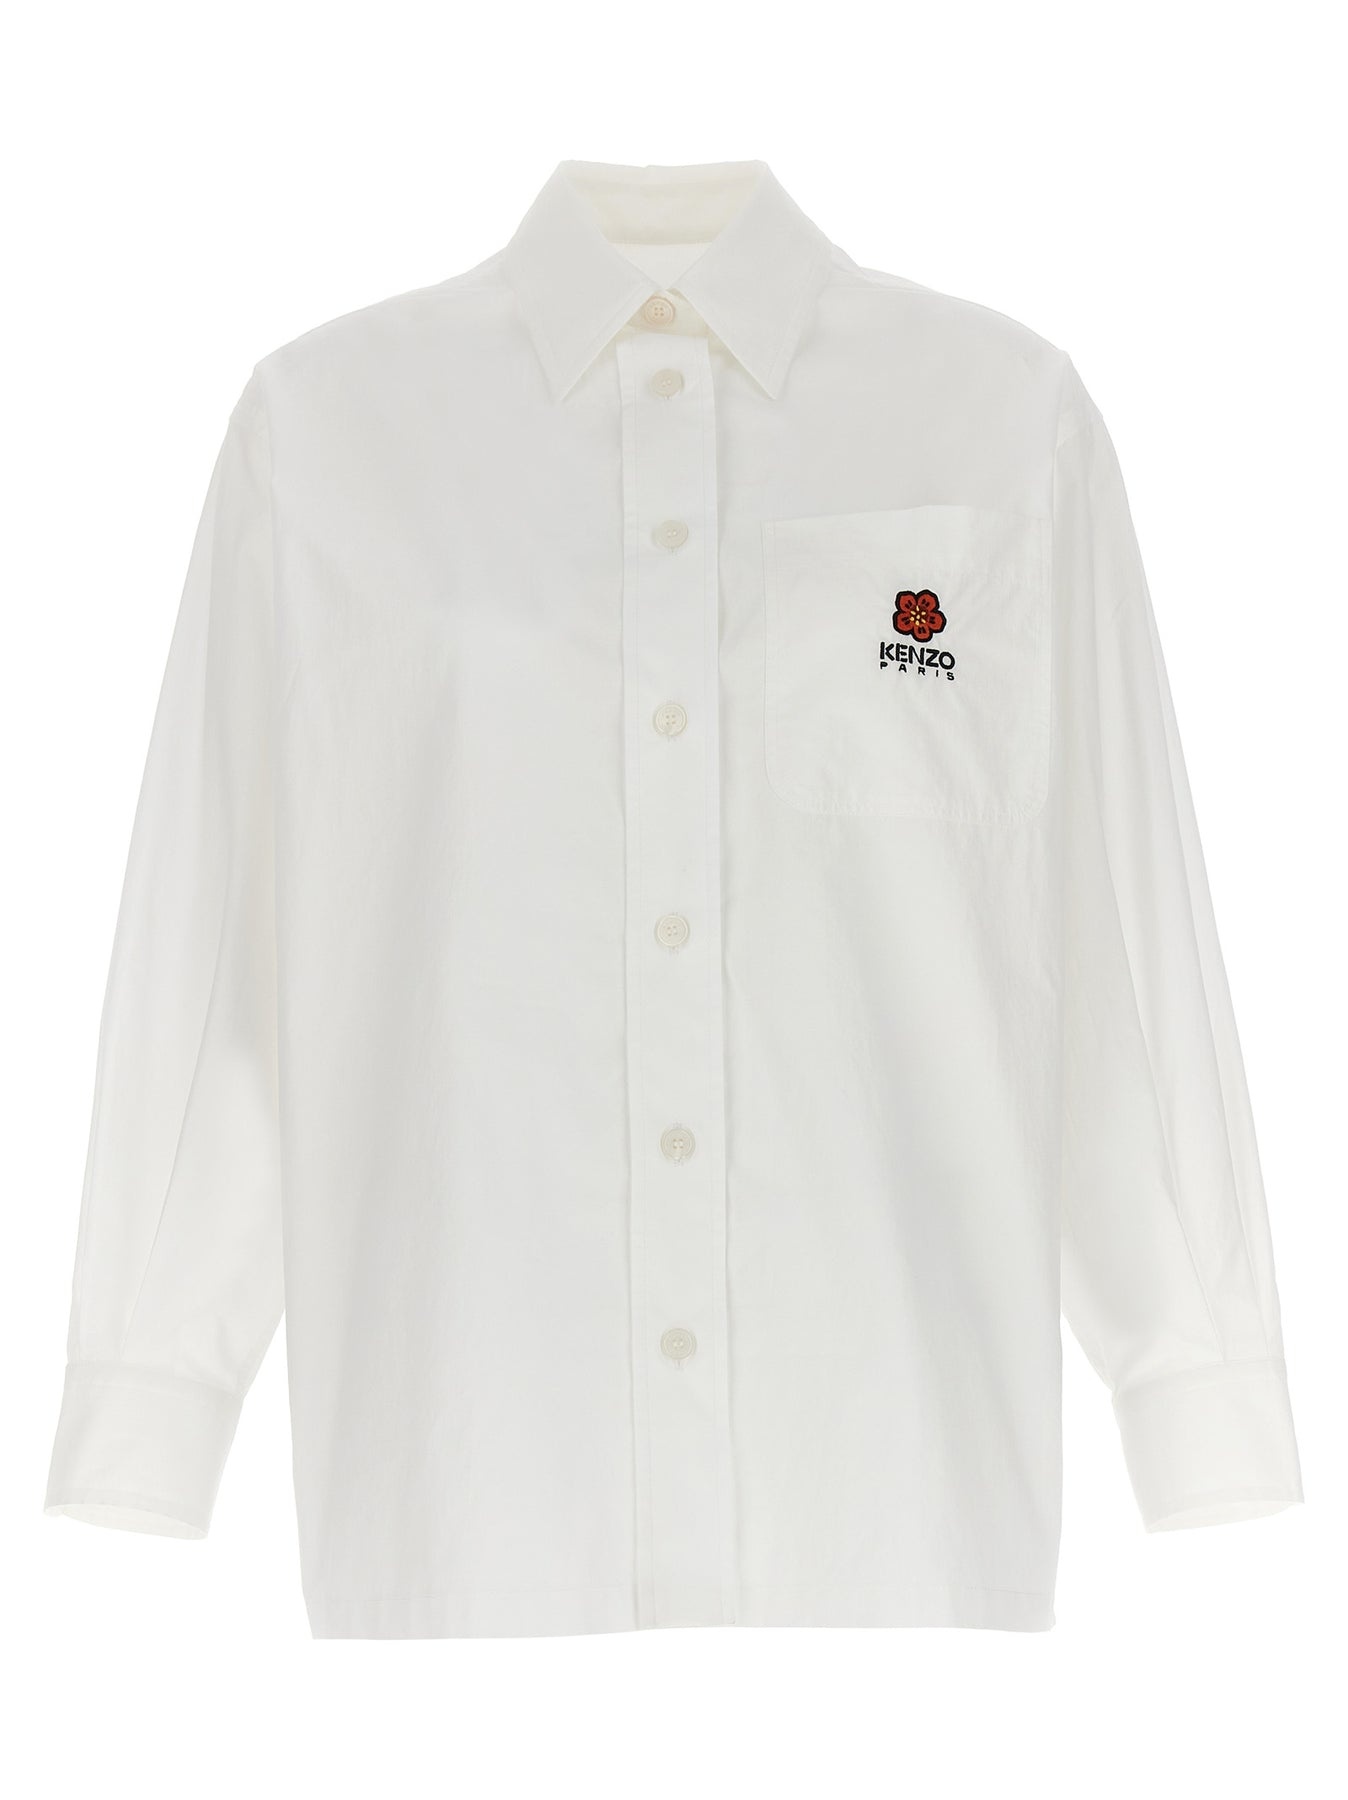 Embroidered Logo Shirt Shirt, Blouse White - 1